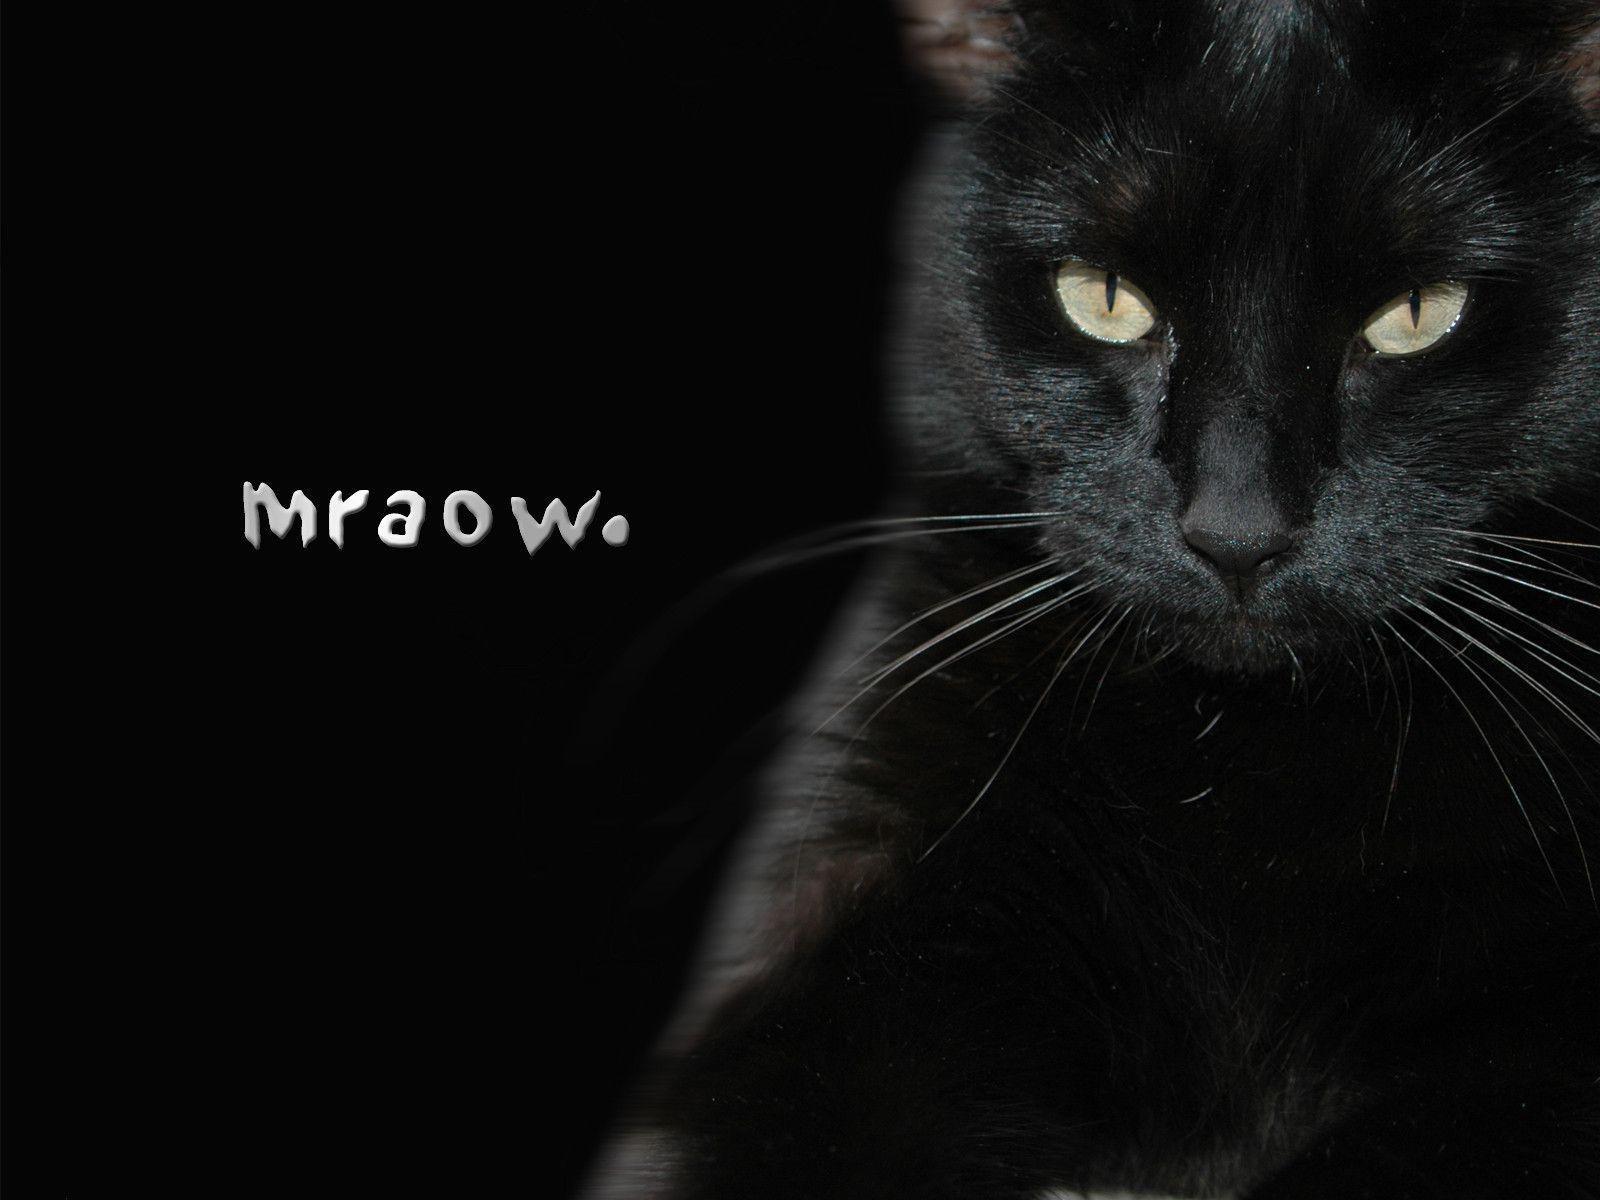 Black Cat Desktop Wallpaper Pictures To Pin